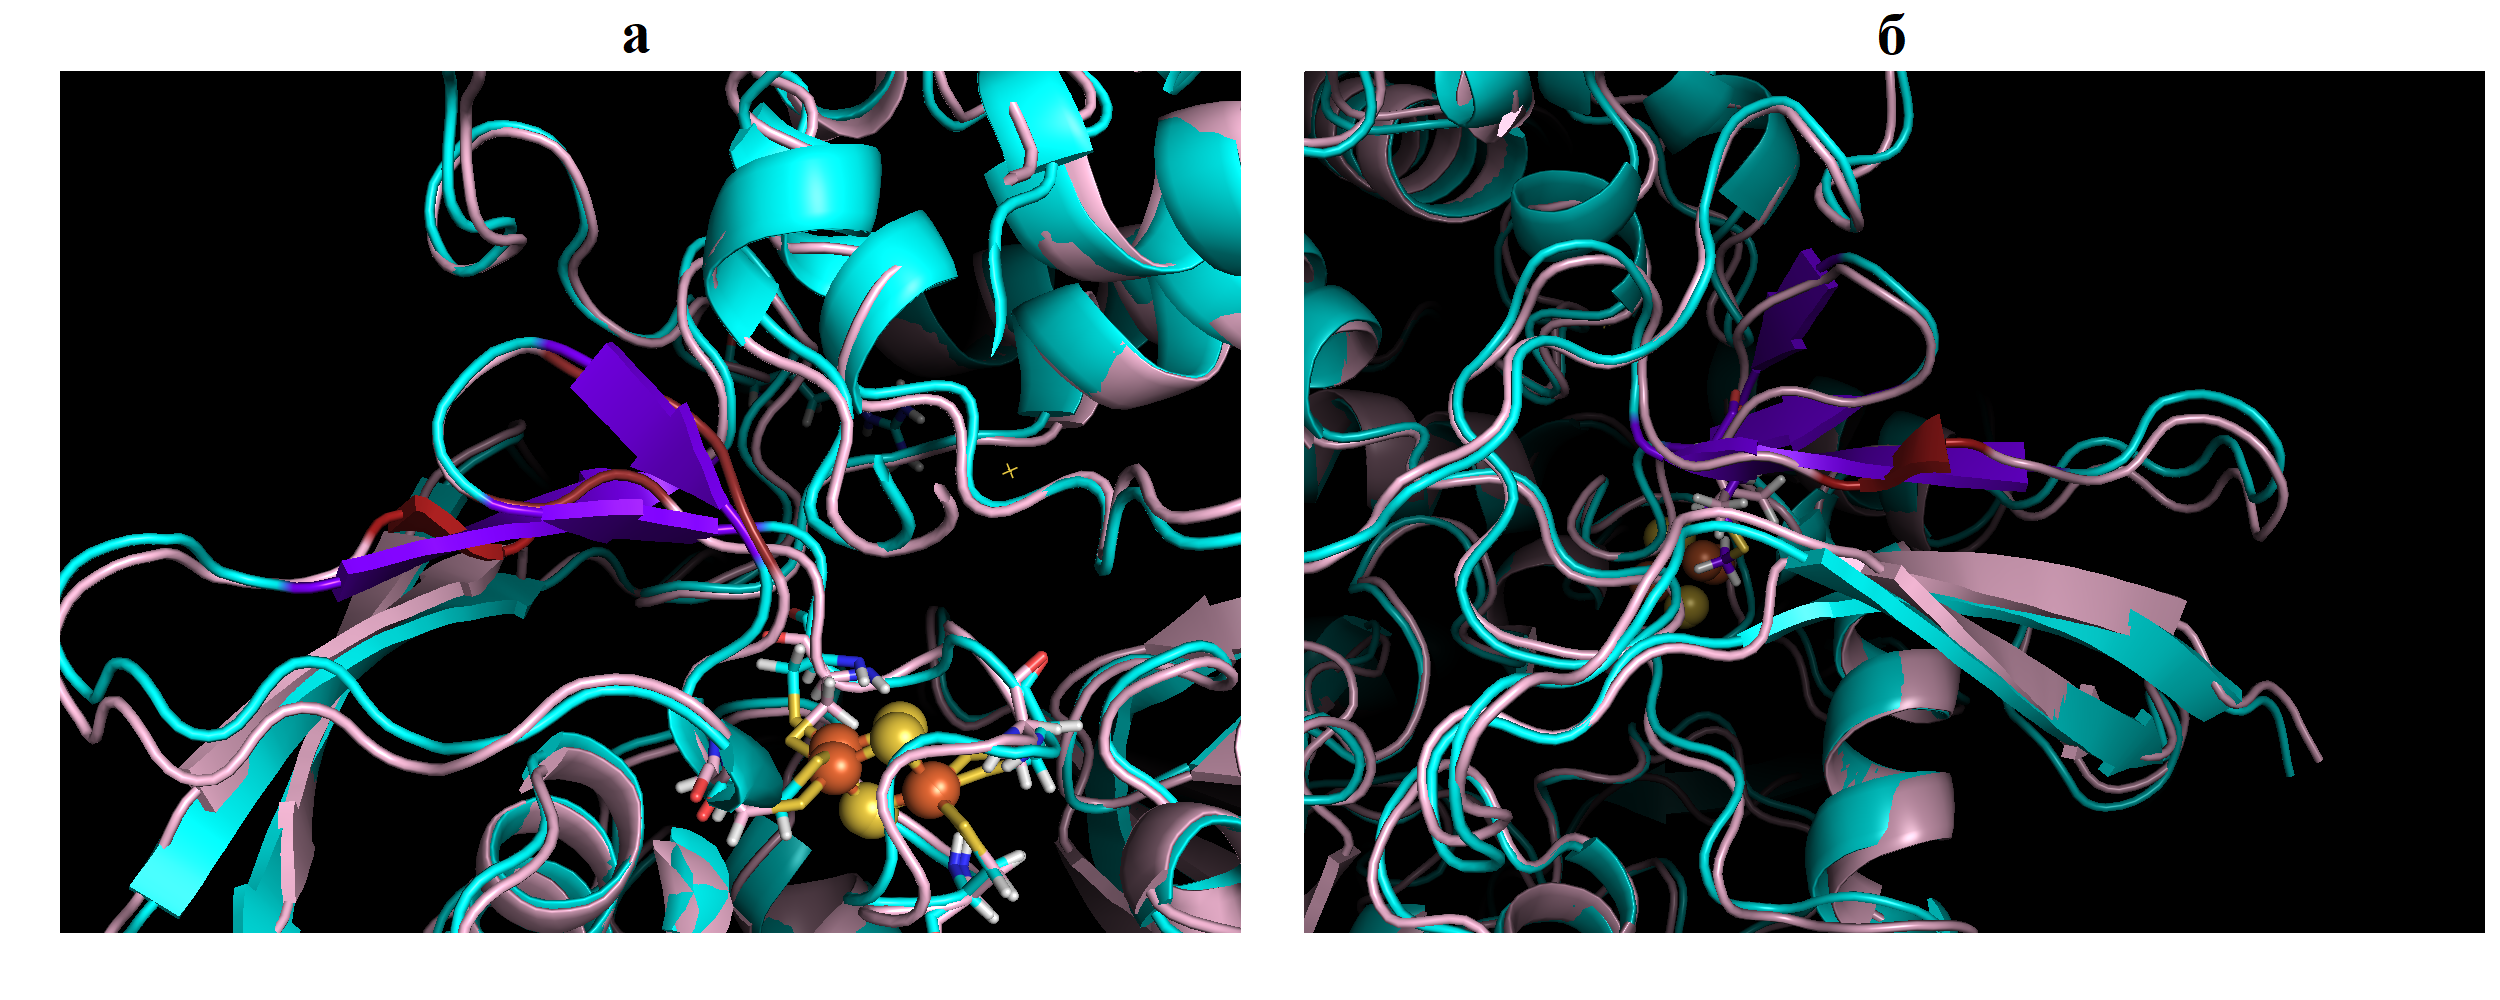 Сравнение структуры нативной субъединицы SDHB и субъединицы c мутацией p.M103V